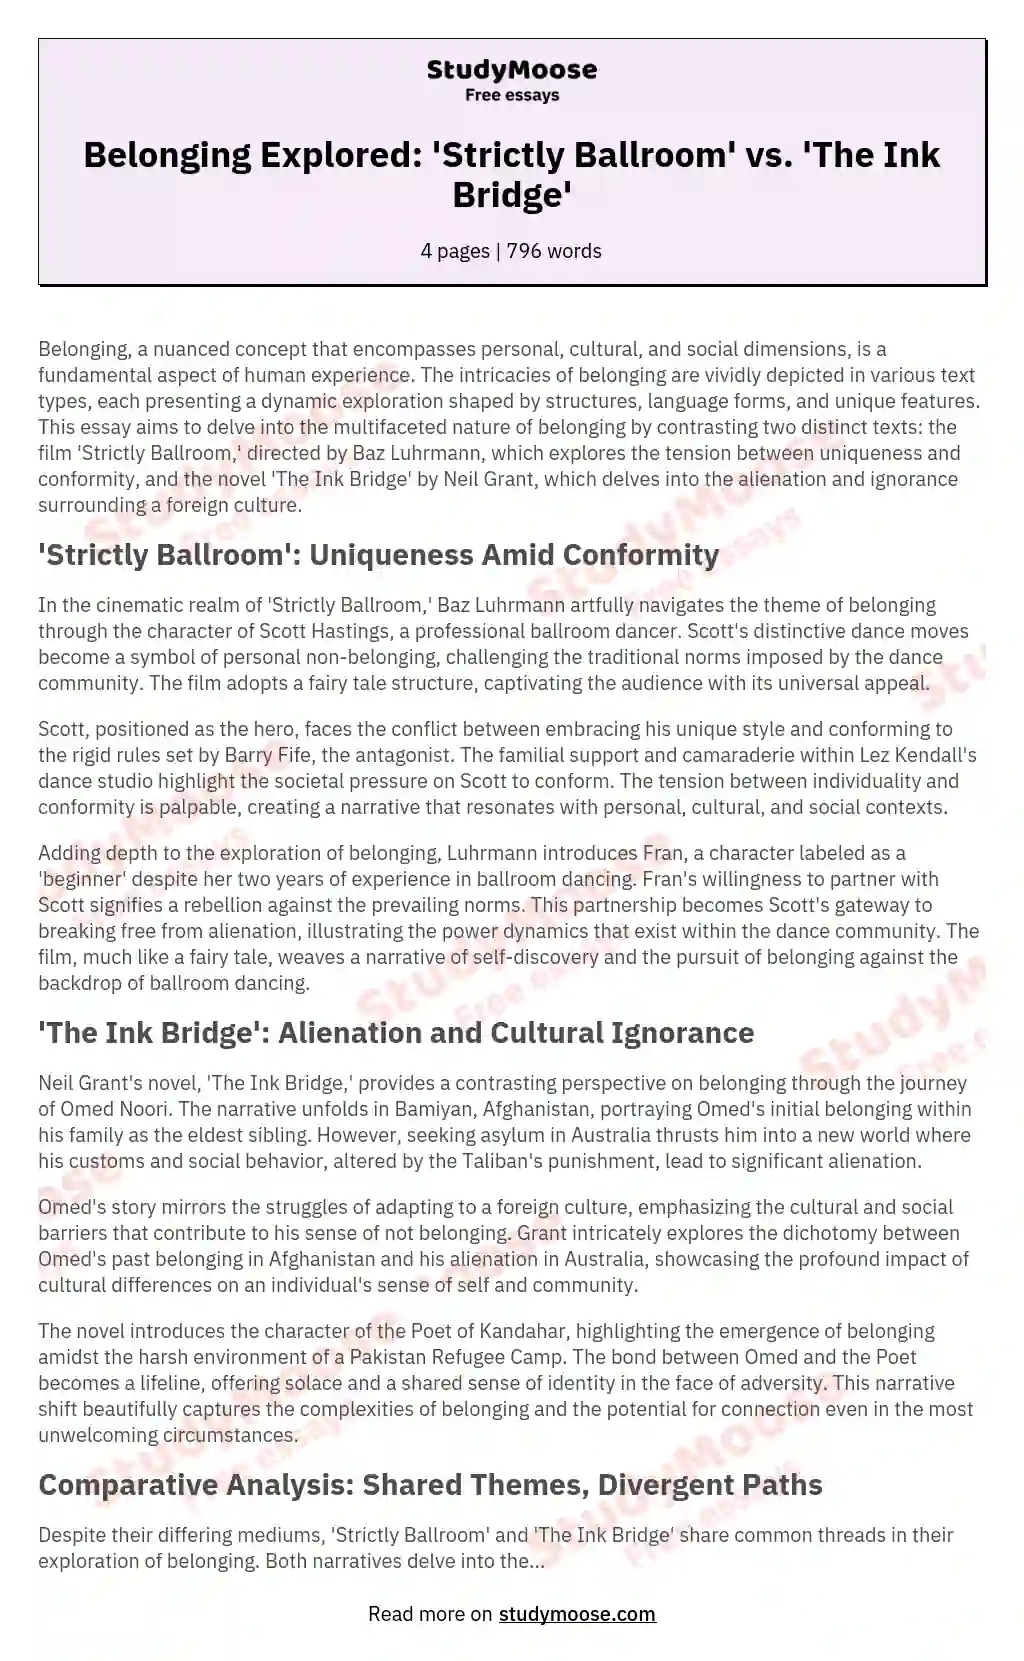 Belonging Explored: 'Strictly Ballroom' vs. 'The Ink Bridge' essay